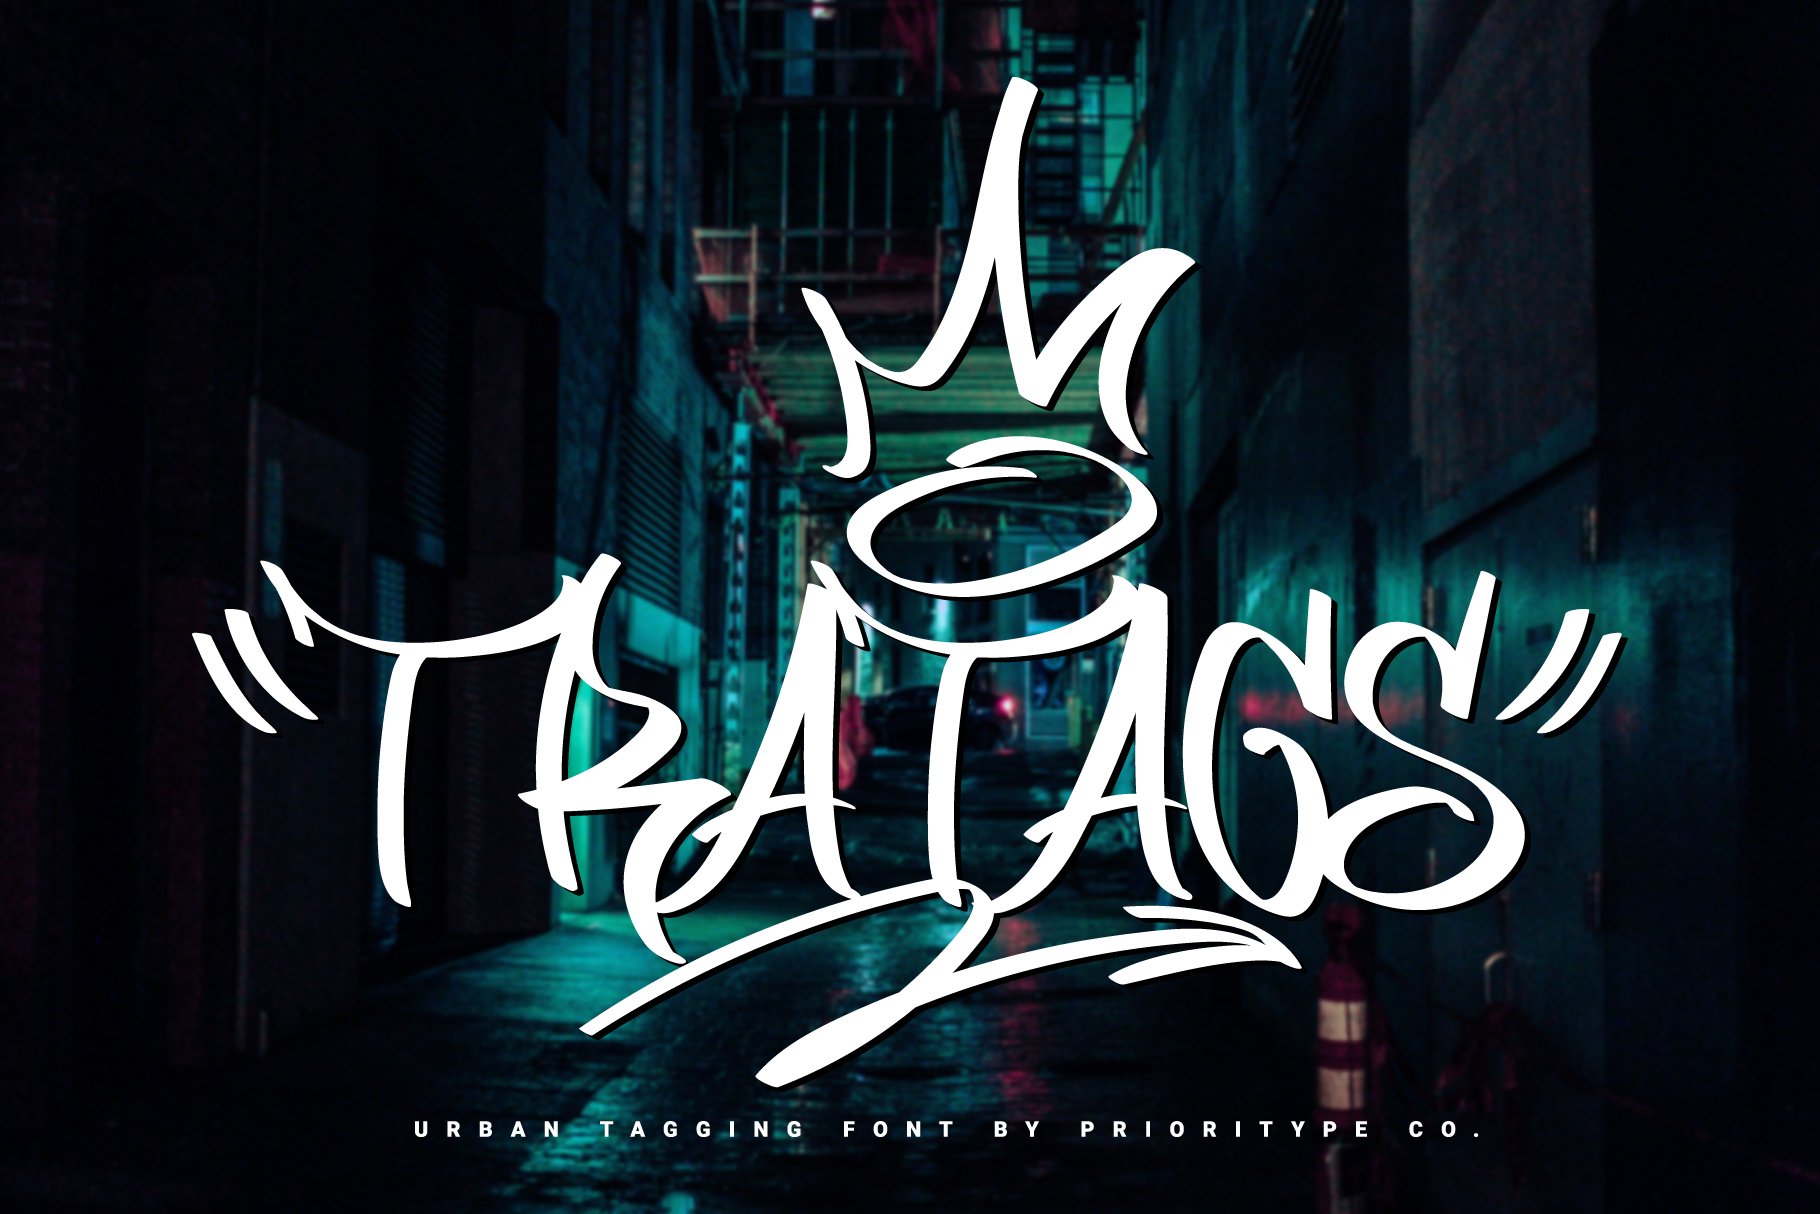 Tratags - Tagging Graffiti Font cover image.